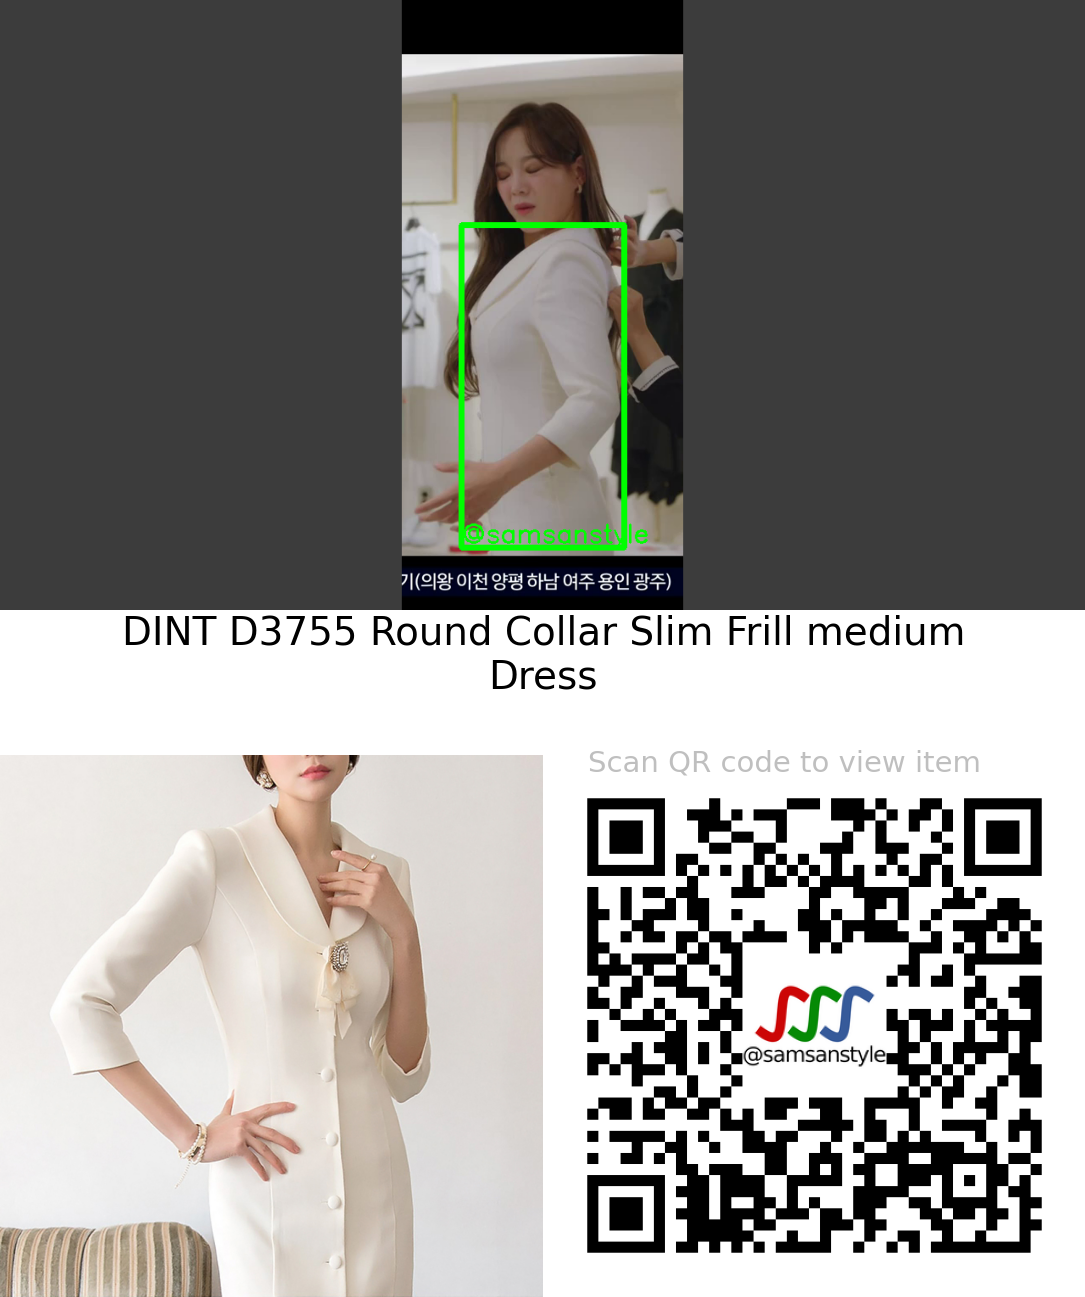 Kim Sejeong | Business Proposal E04 | DINT D3755 Round Collar Slim Frill medium Dress